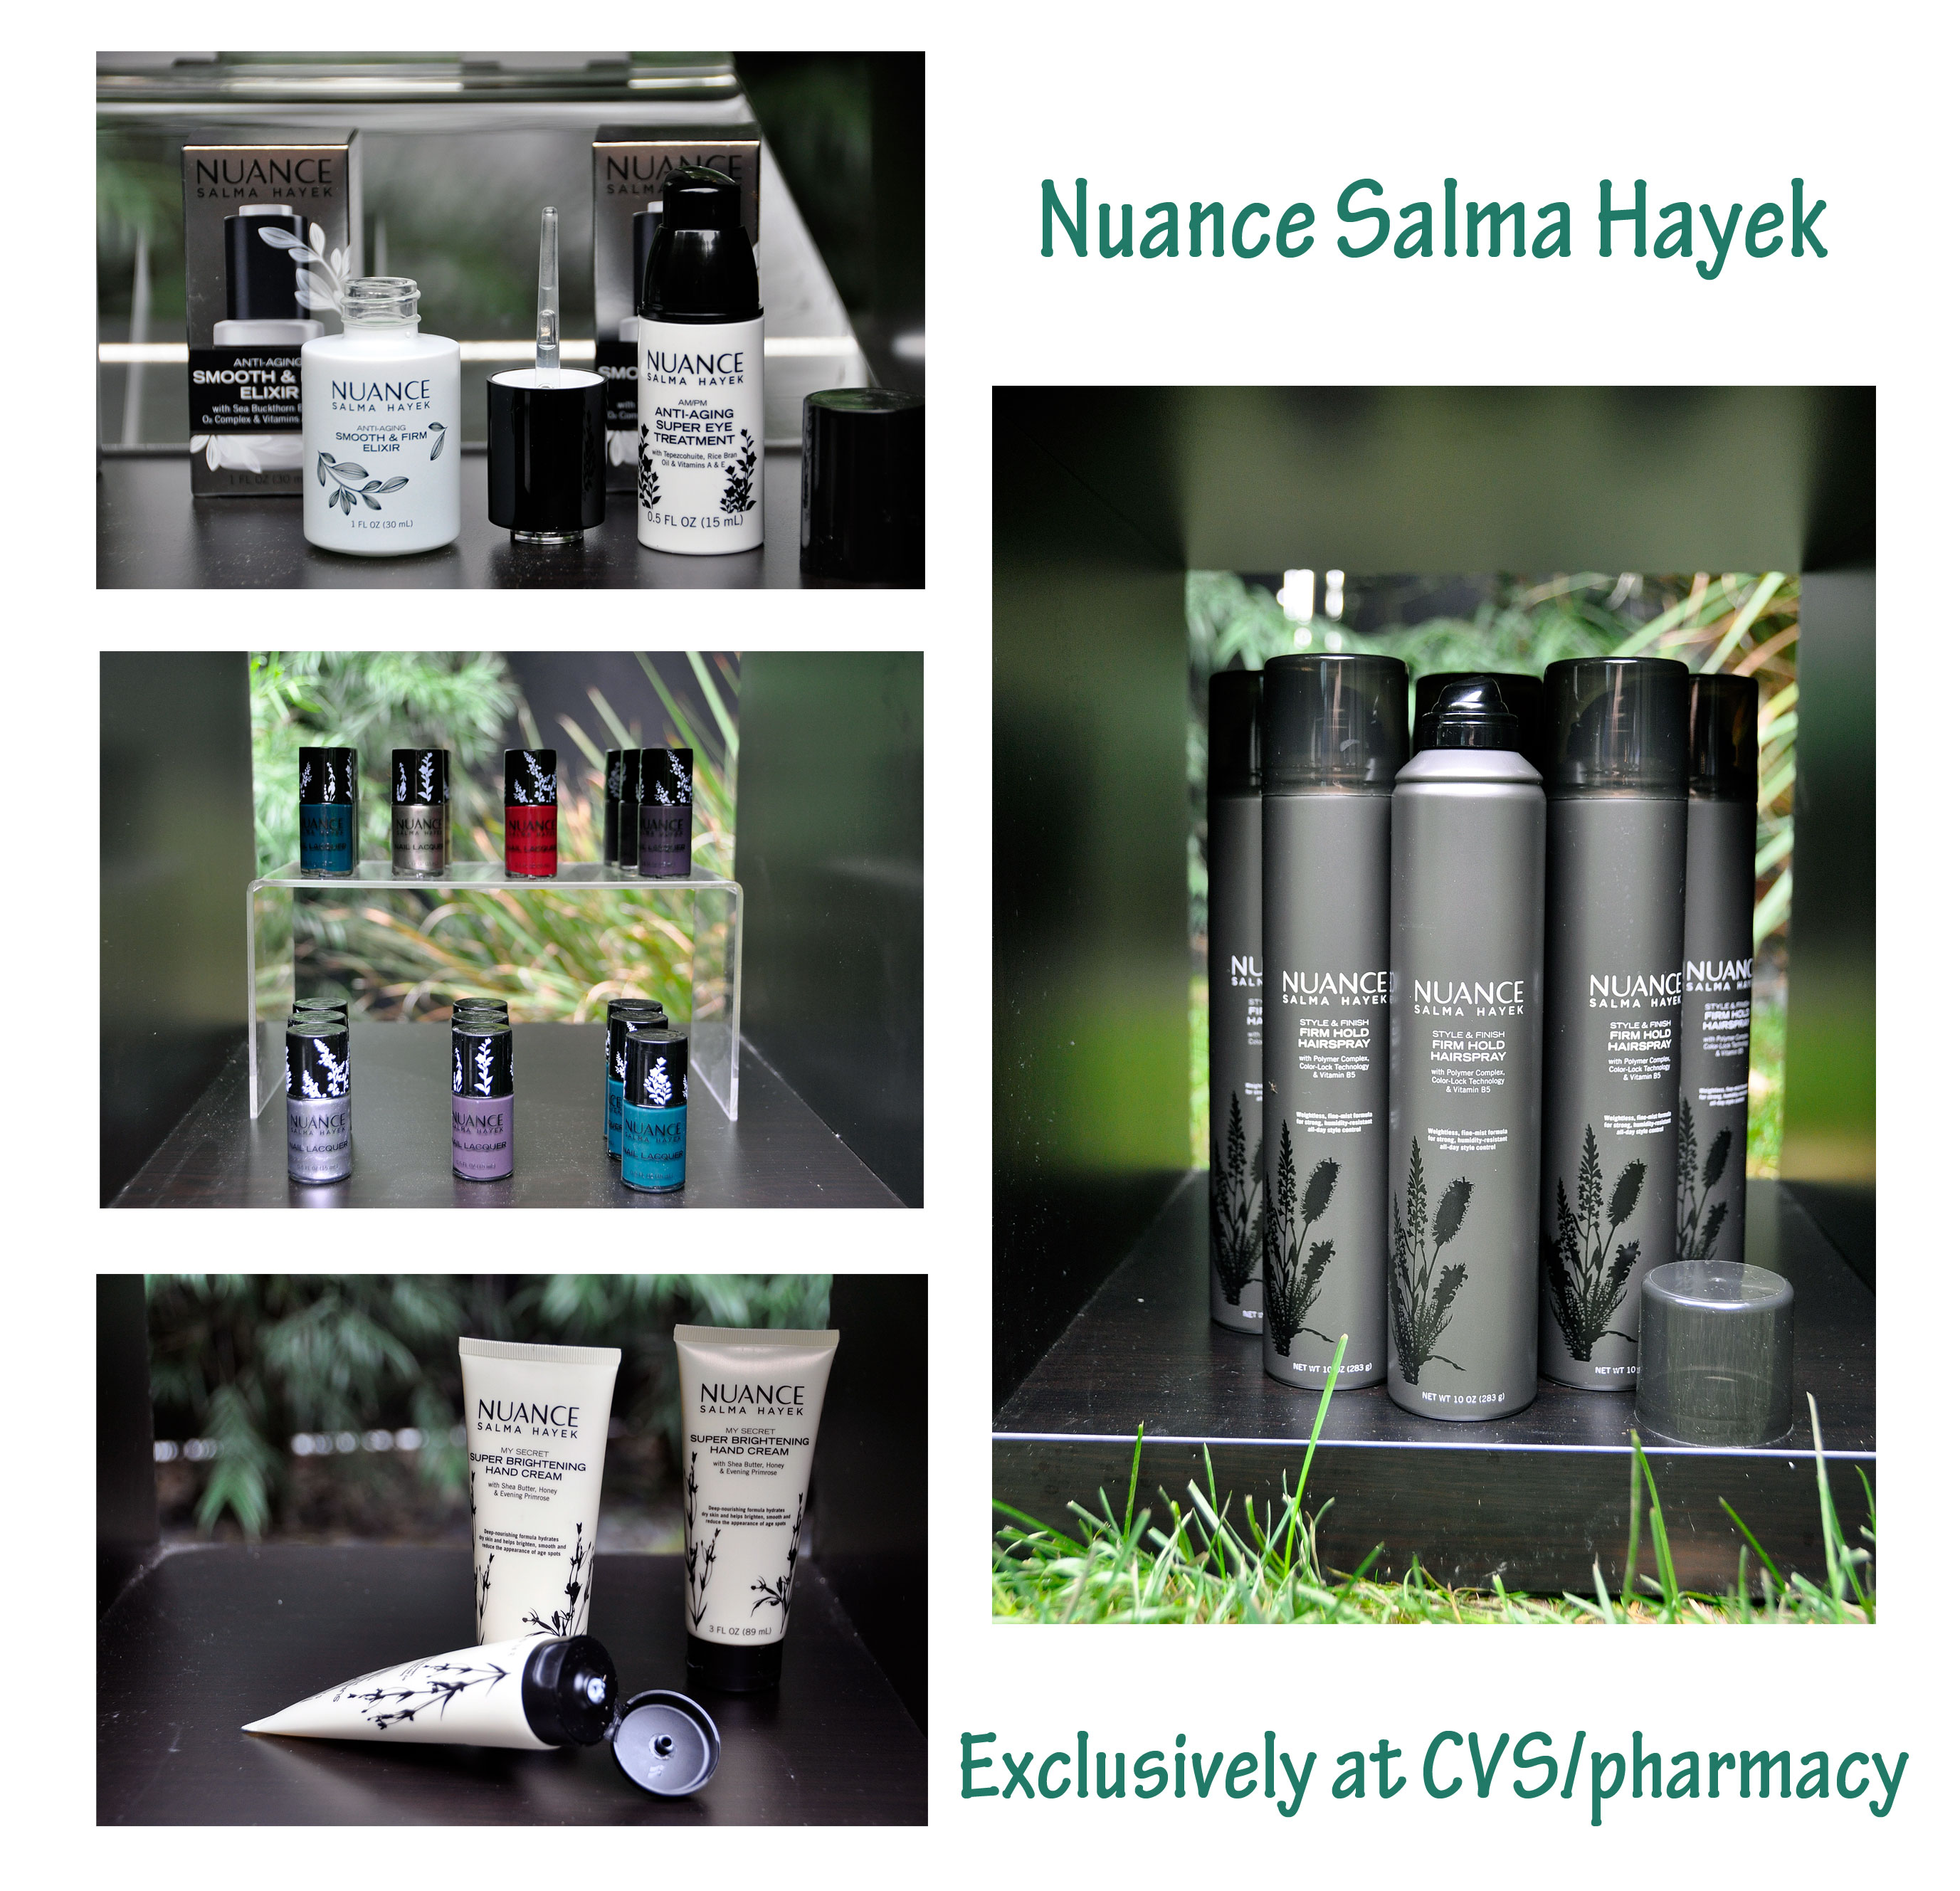 Nuance Salma Hayek Product Line